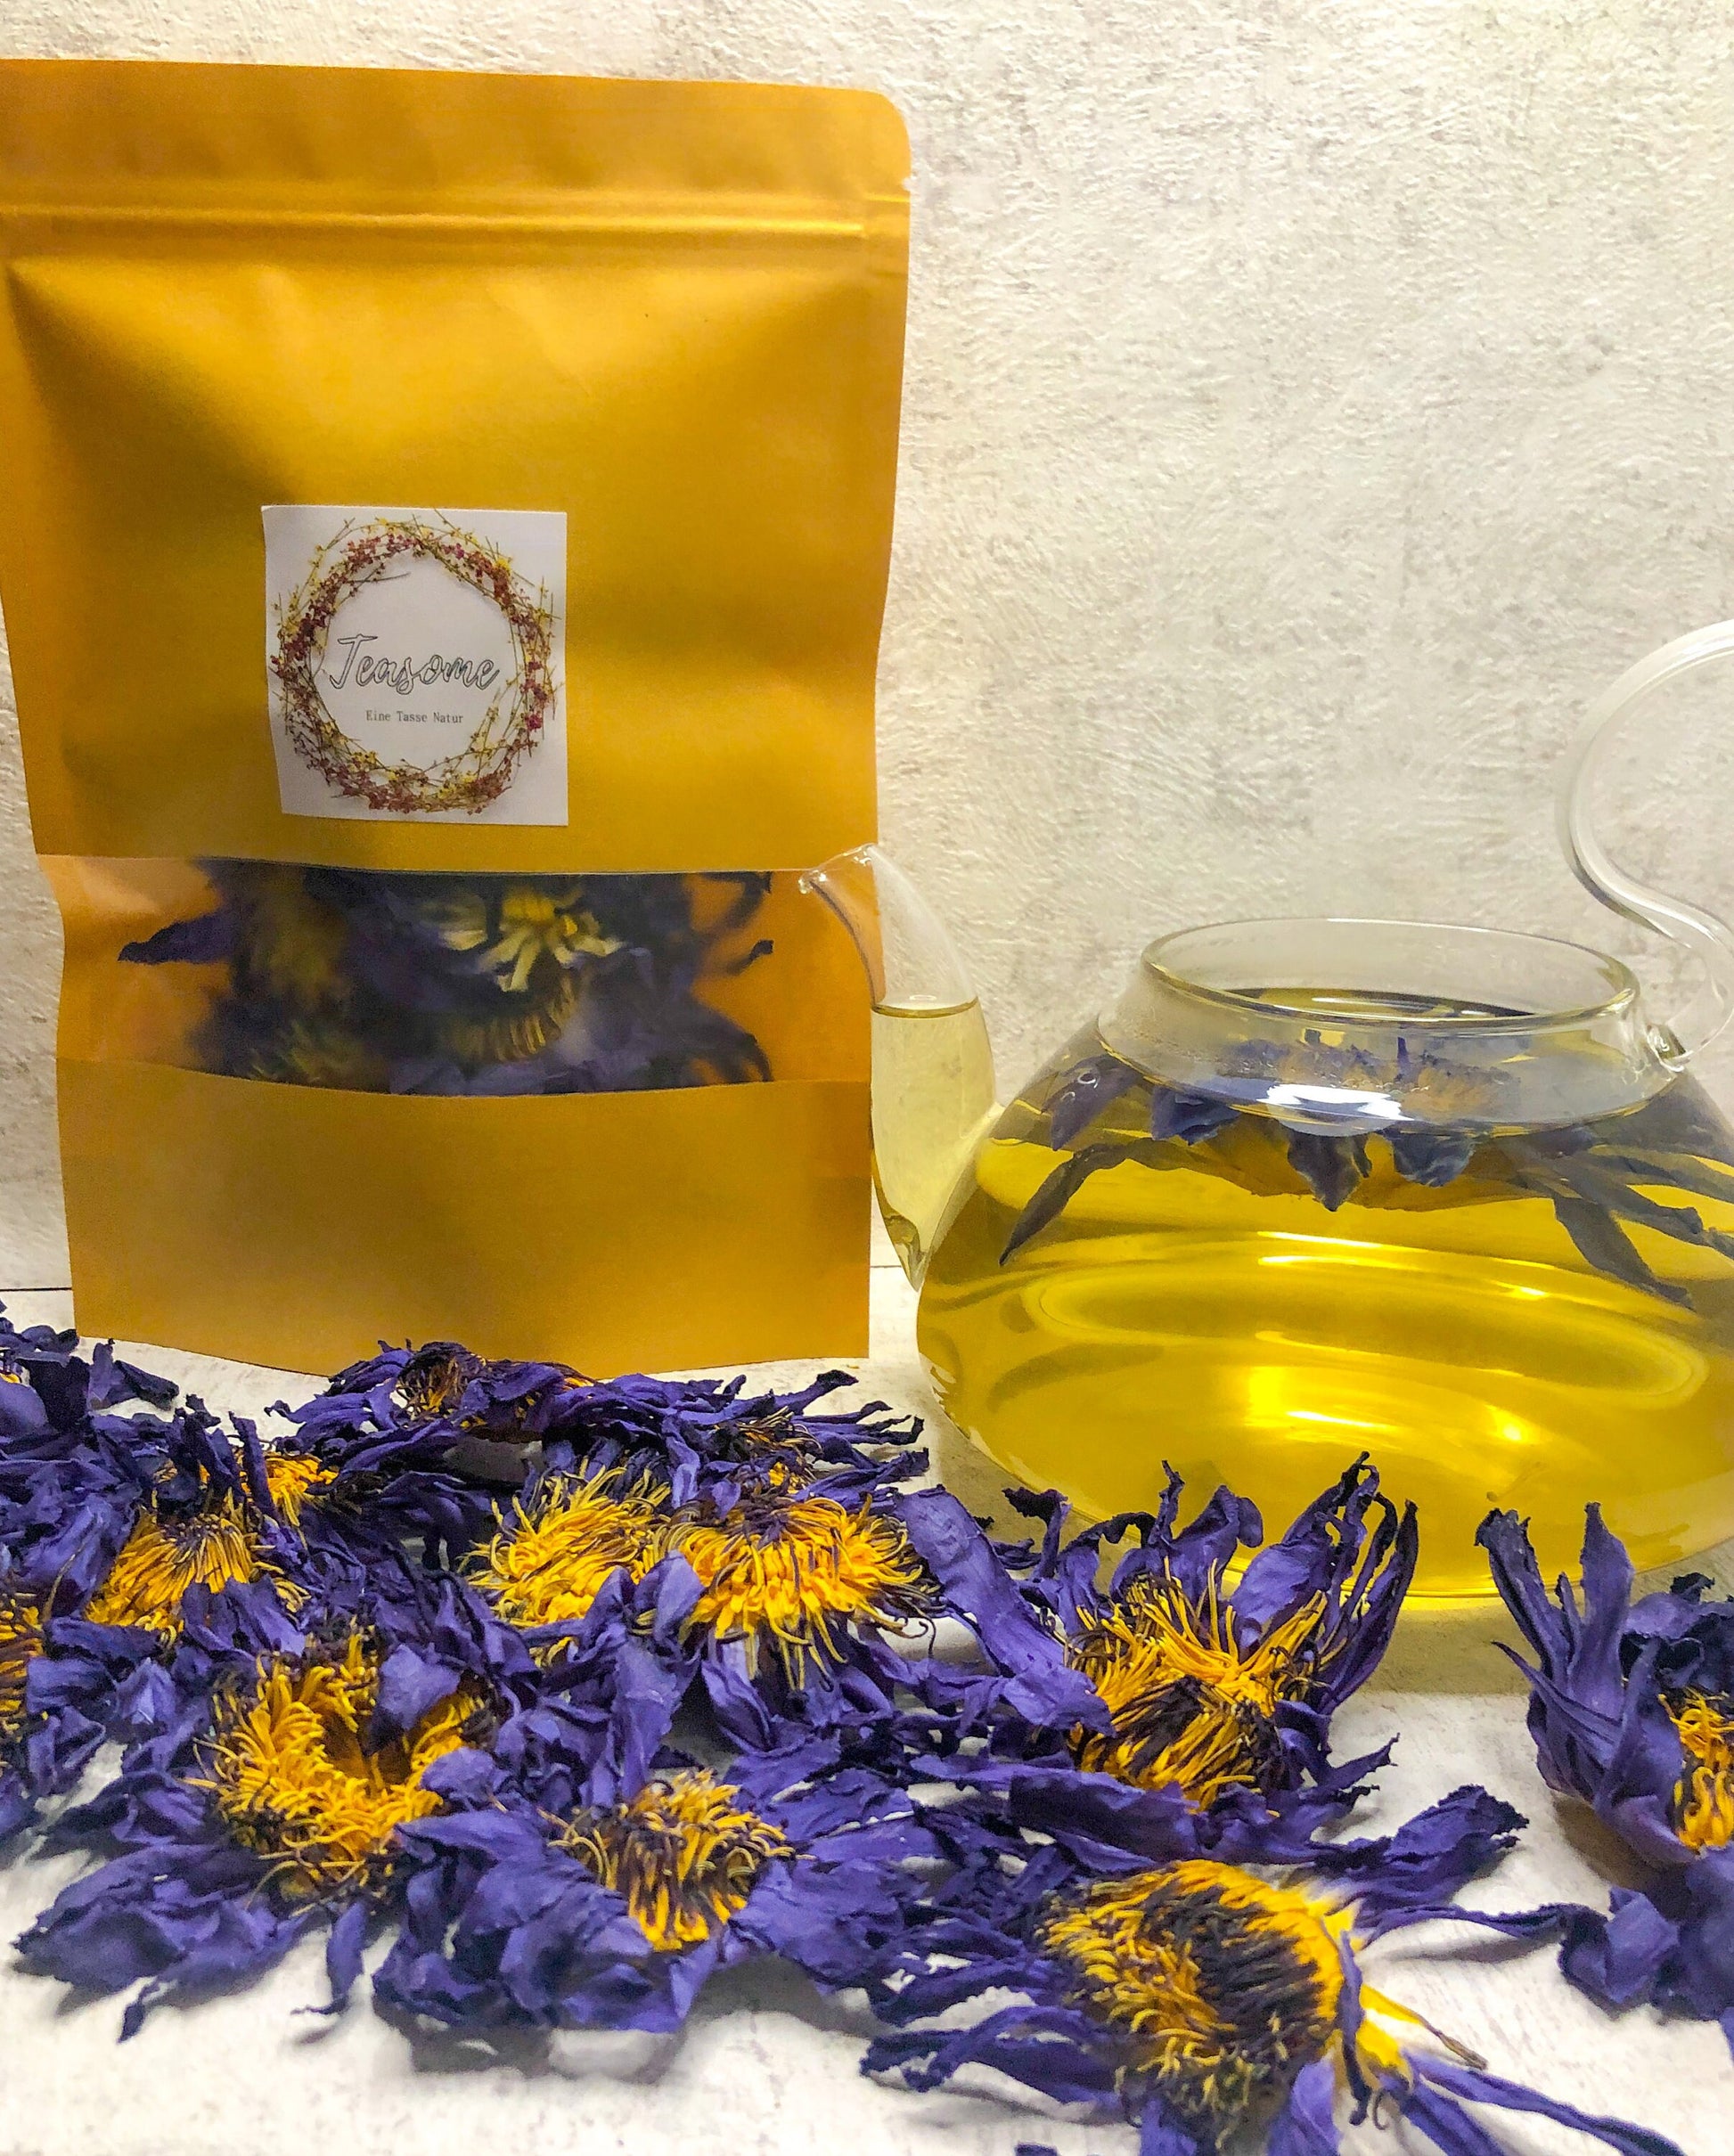 Blauer Lotus Tee kaufen